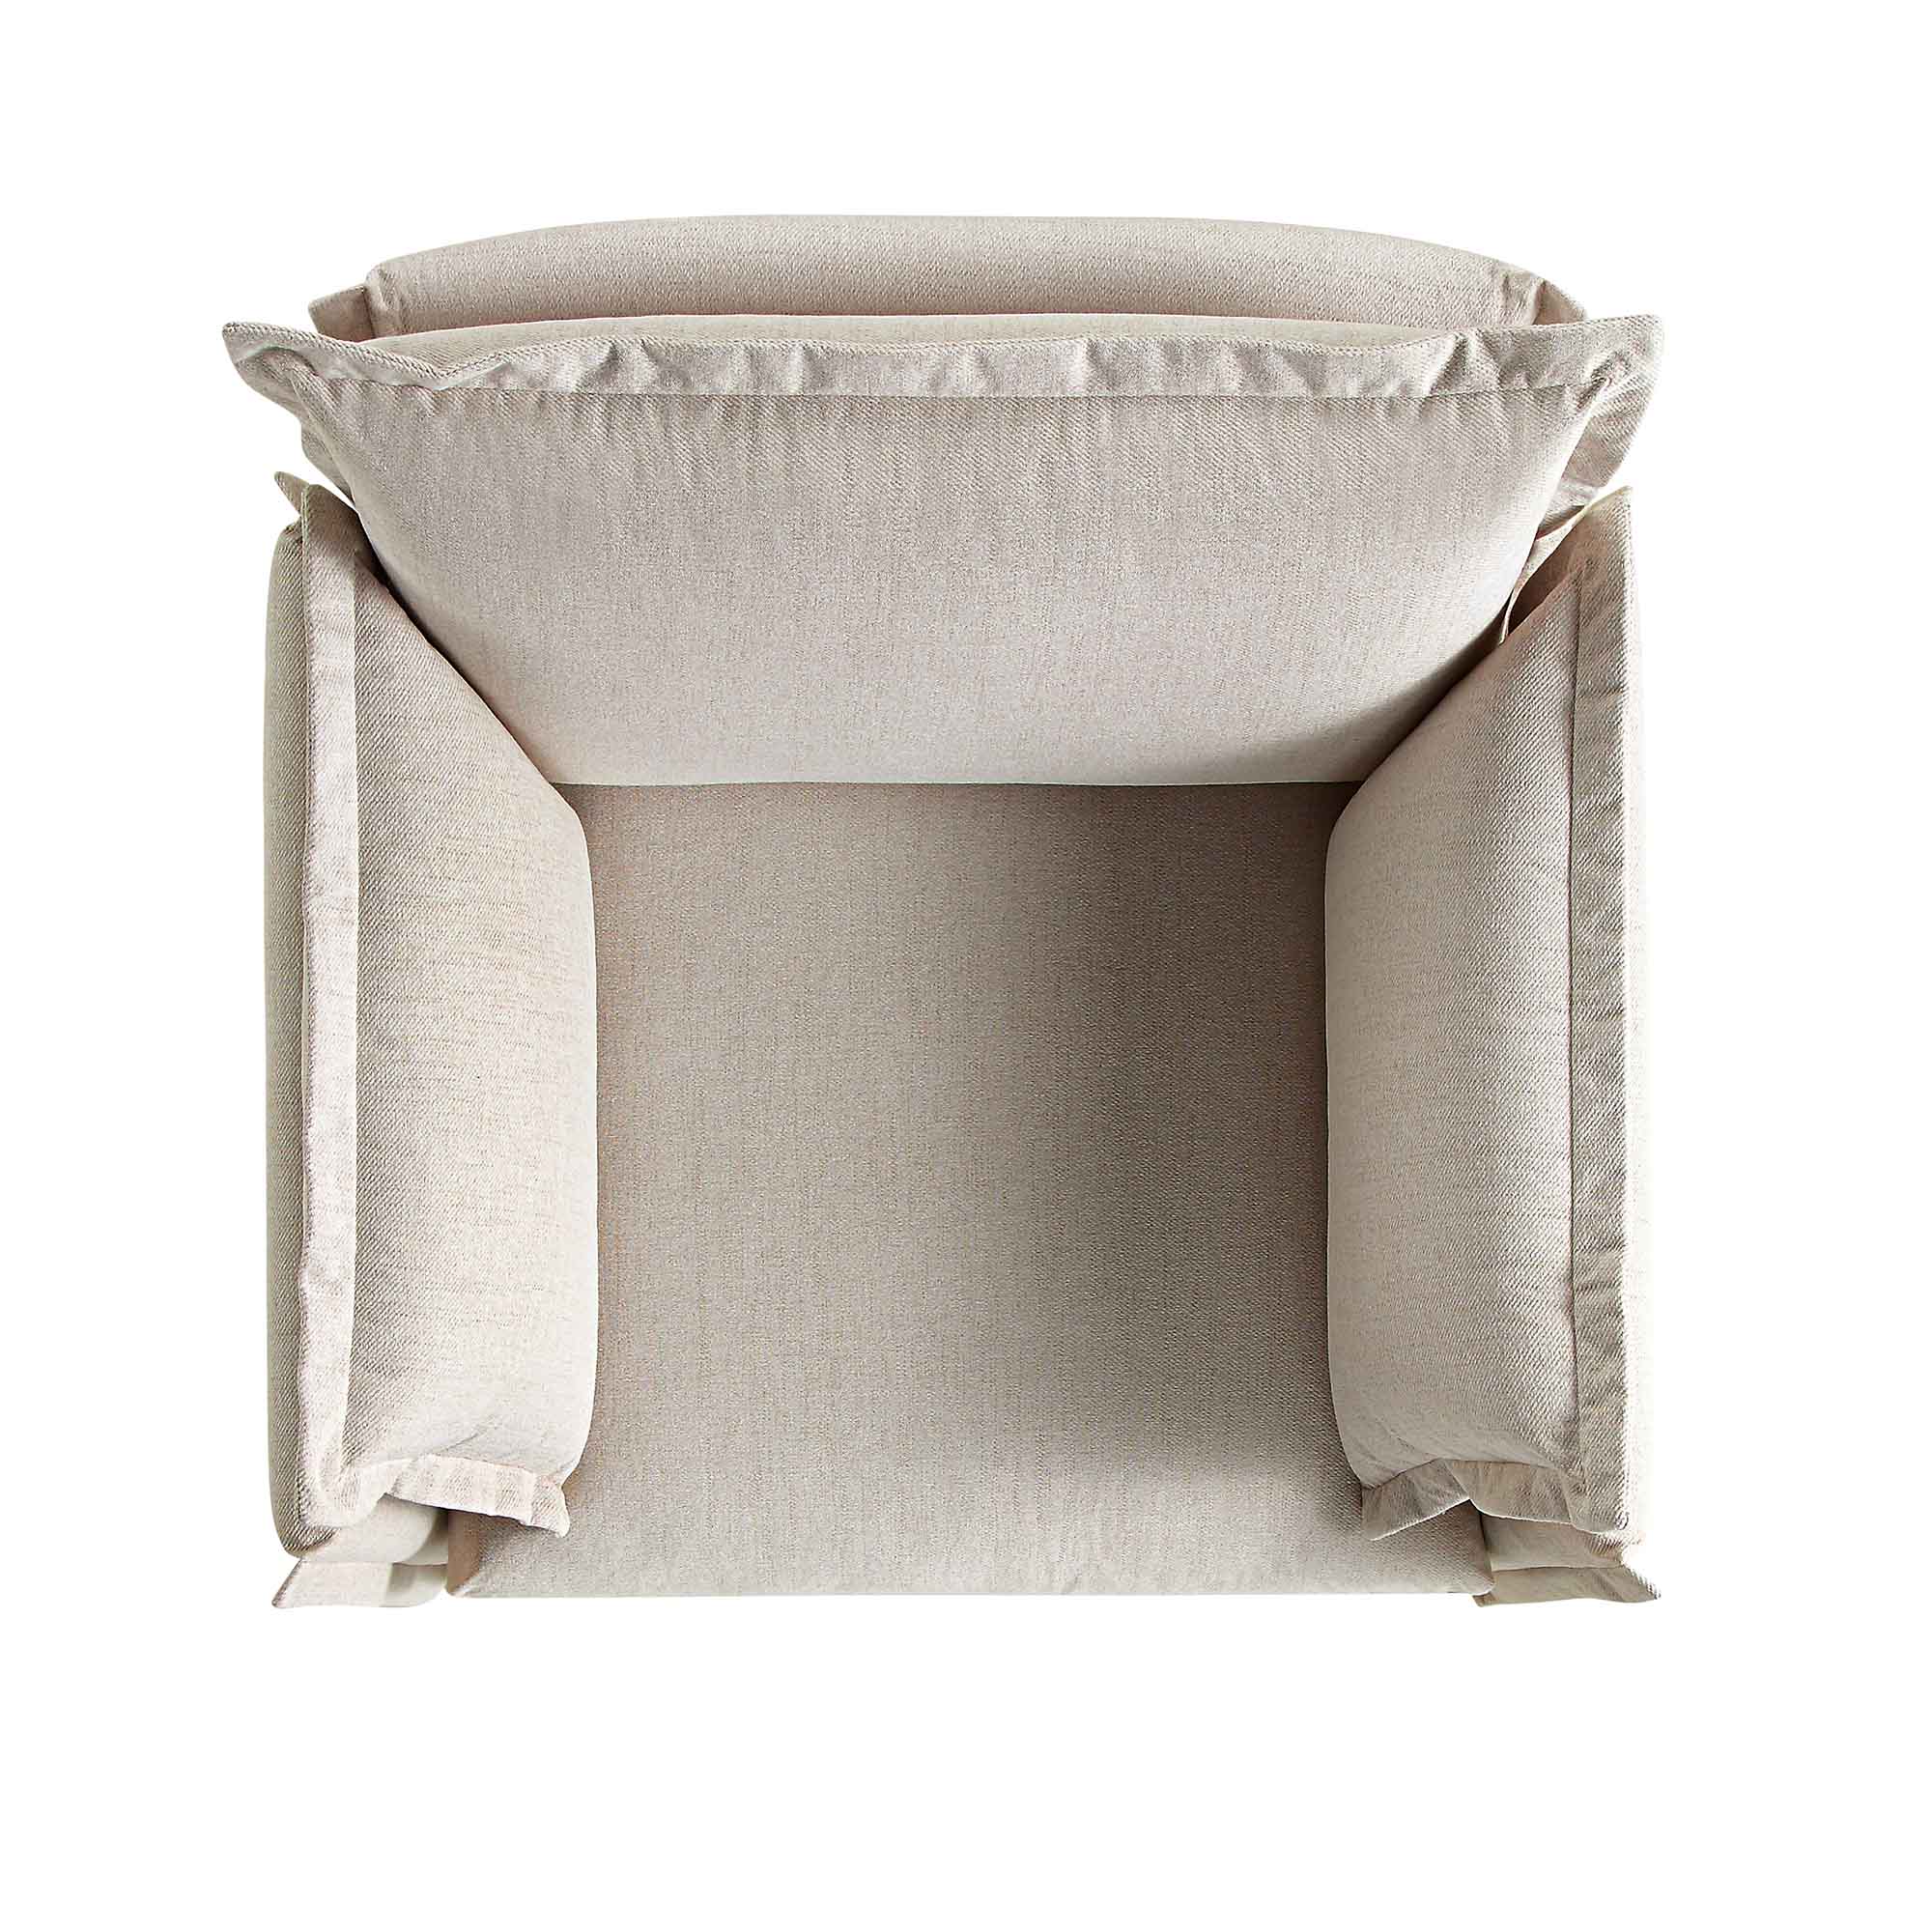 Byron Pillow Edge Beige Fabric Modular Sofa, 1-Seater